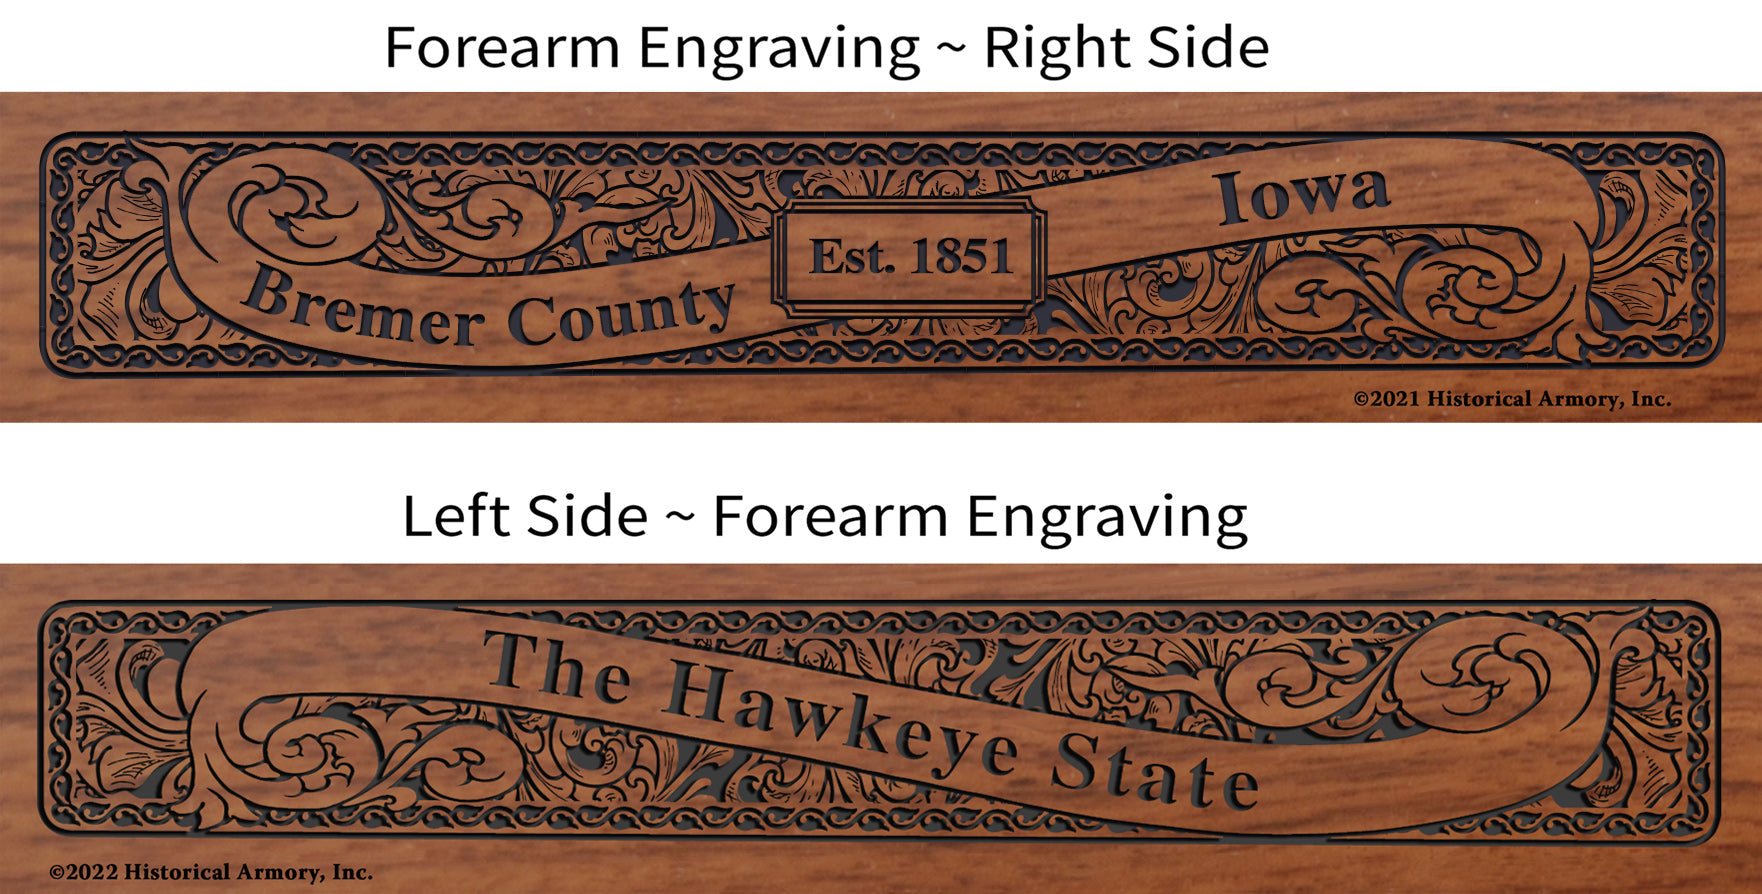 Bremer County Iowa Engraved Rifle Forearm